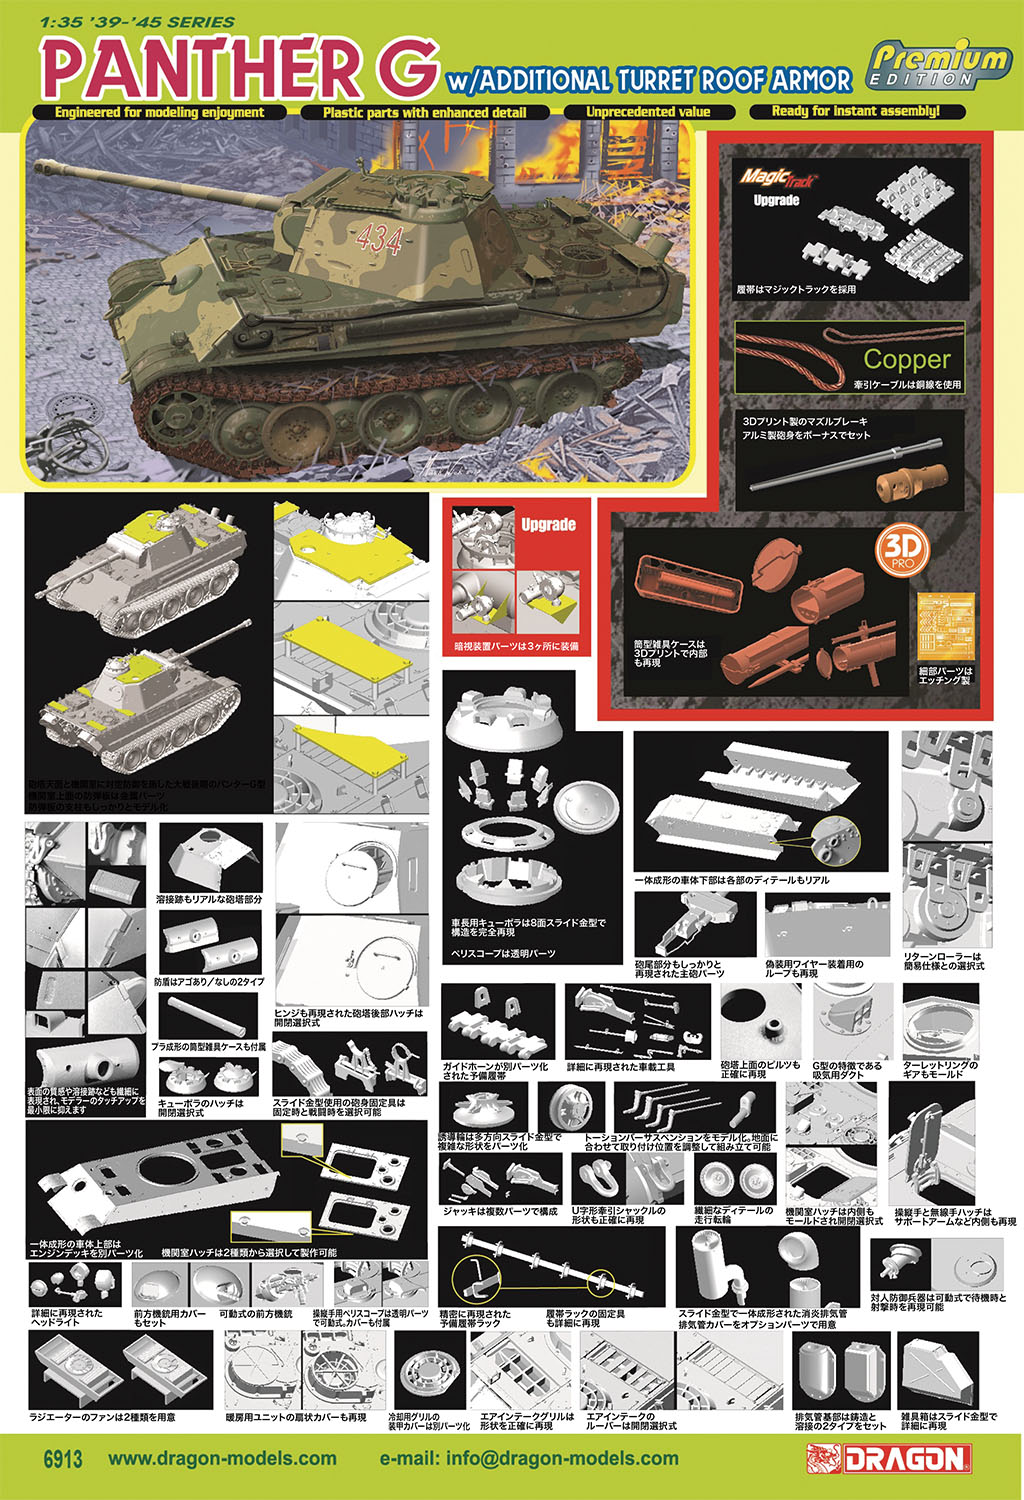 1/35 WW.II ドイツ軍 パンター戦車G型 対空用増加装甲タイプ マジックトラック/アルミ砲身/暗視装置/3Dプリント製マ